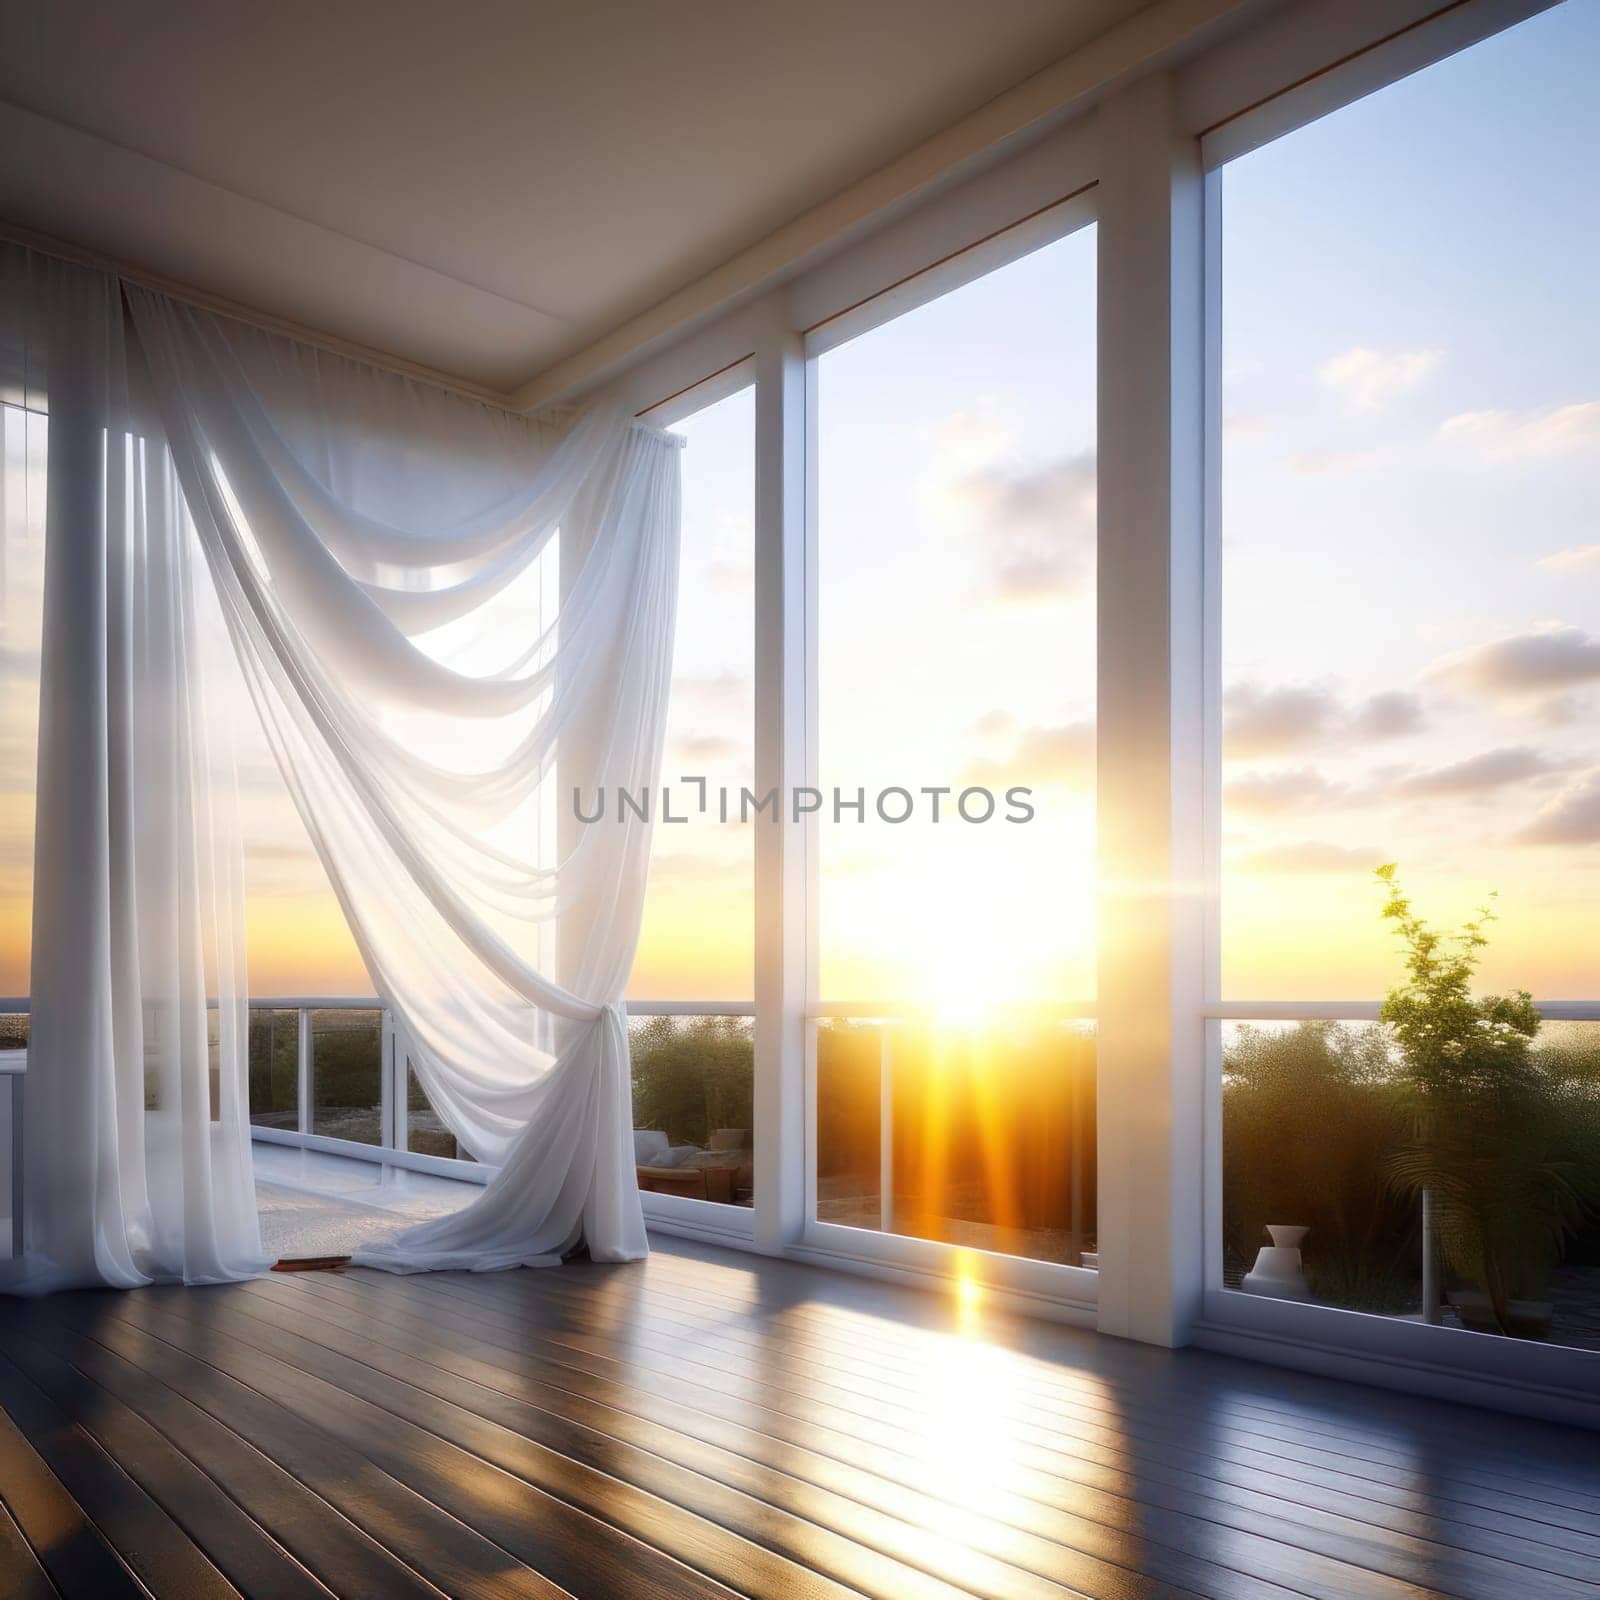 veranda. Image created by AI